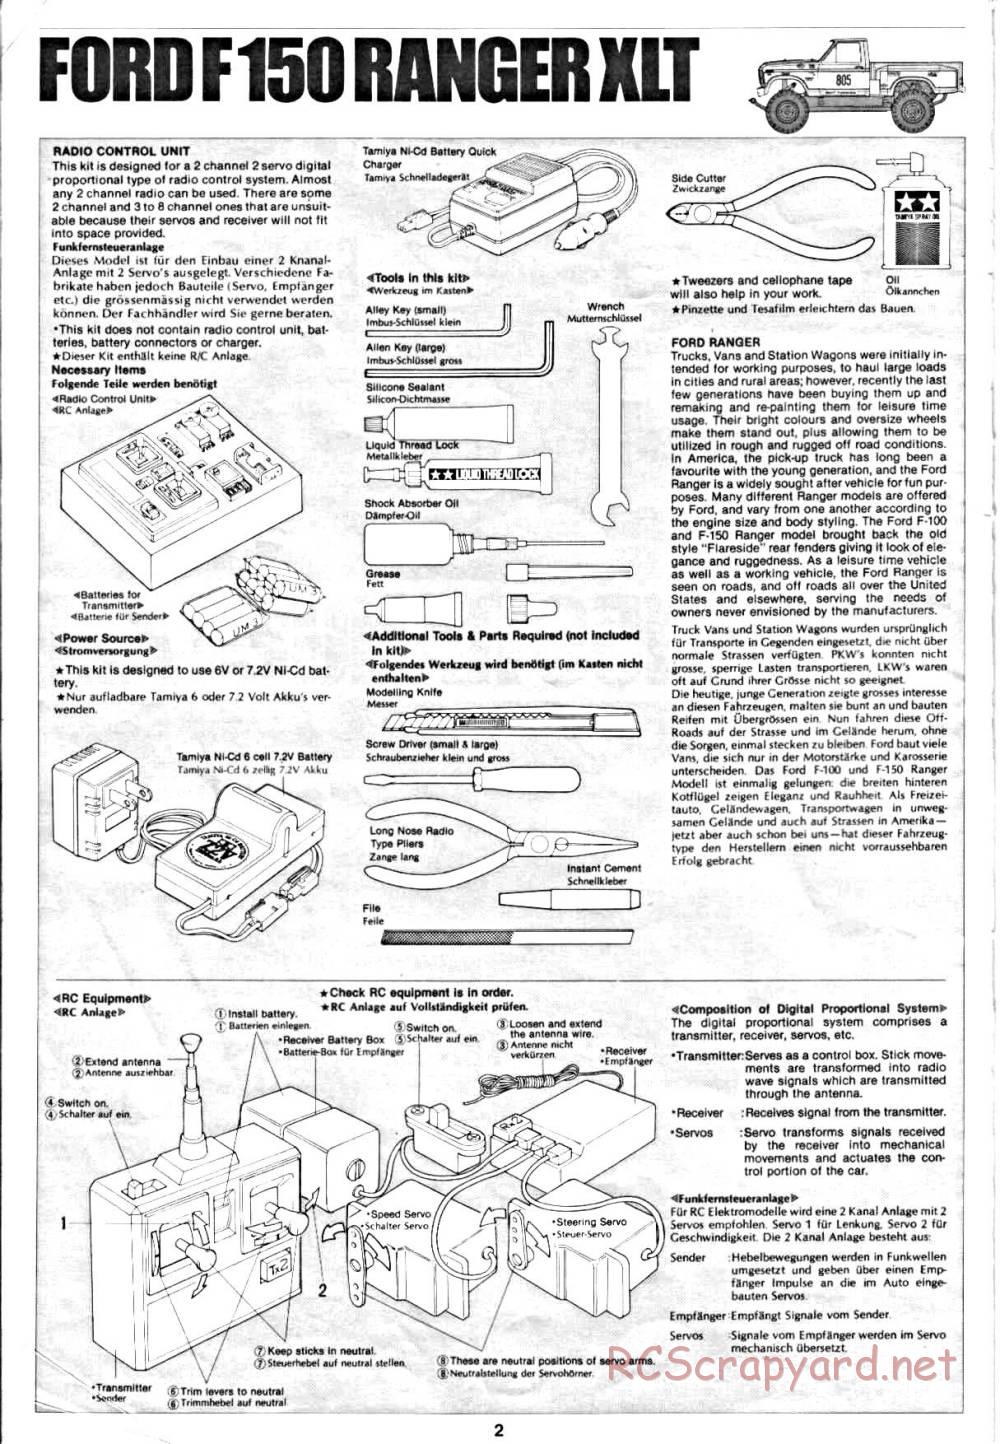 Tamiya - Ford F-150 Ranger XLT - 58027 - Manual - Page 2